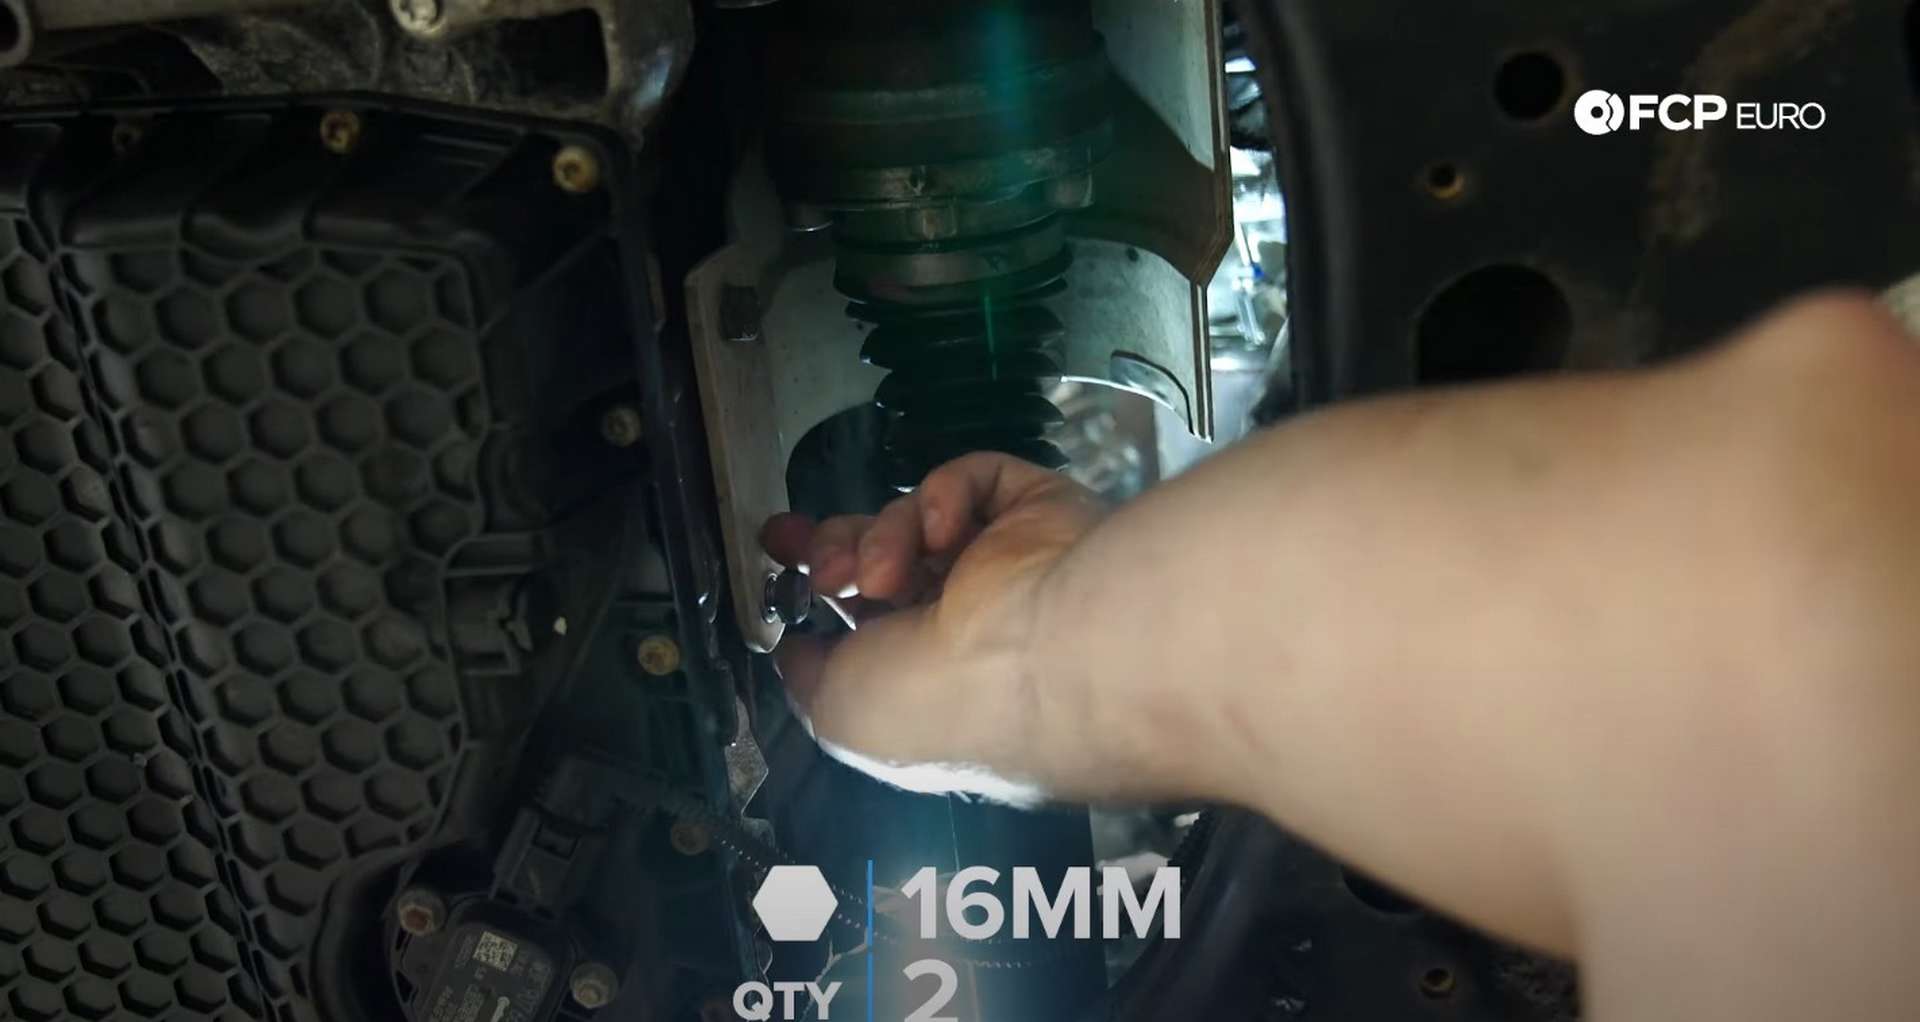 DIY MK7 VW GTI Turbocharger Upgrade installing the axle’s heat shield